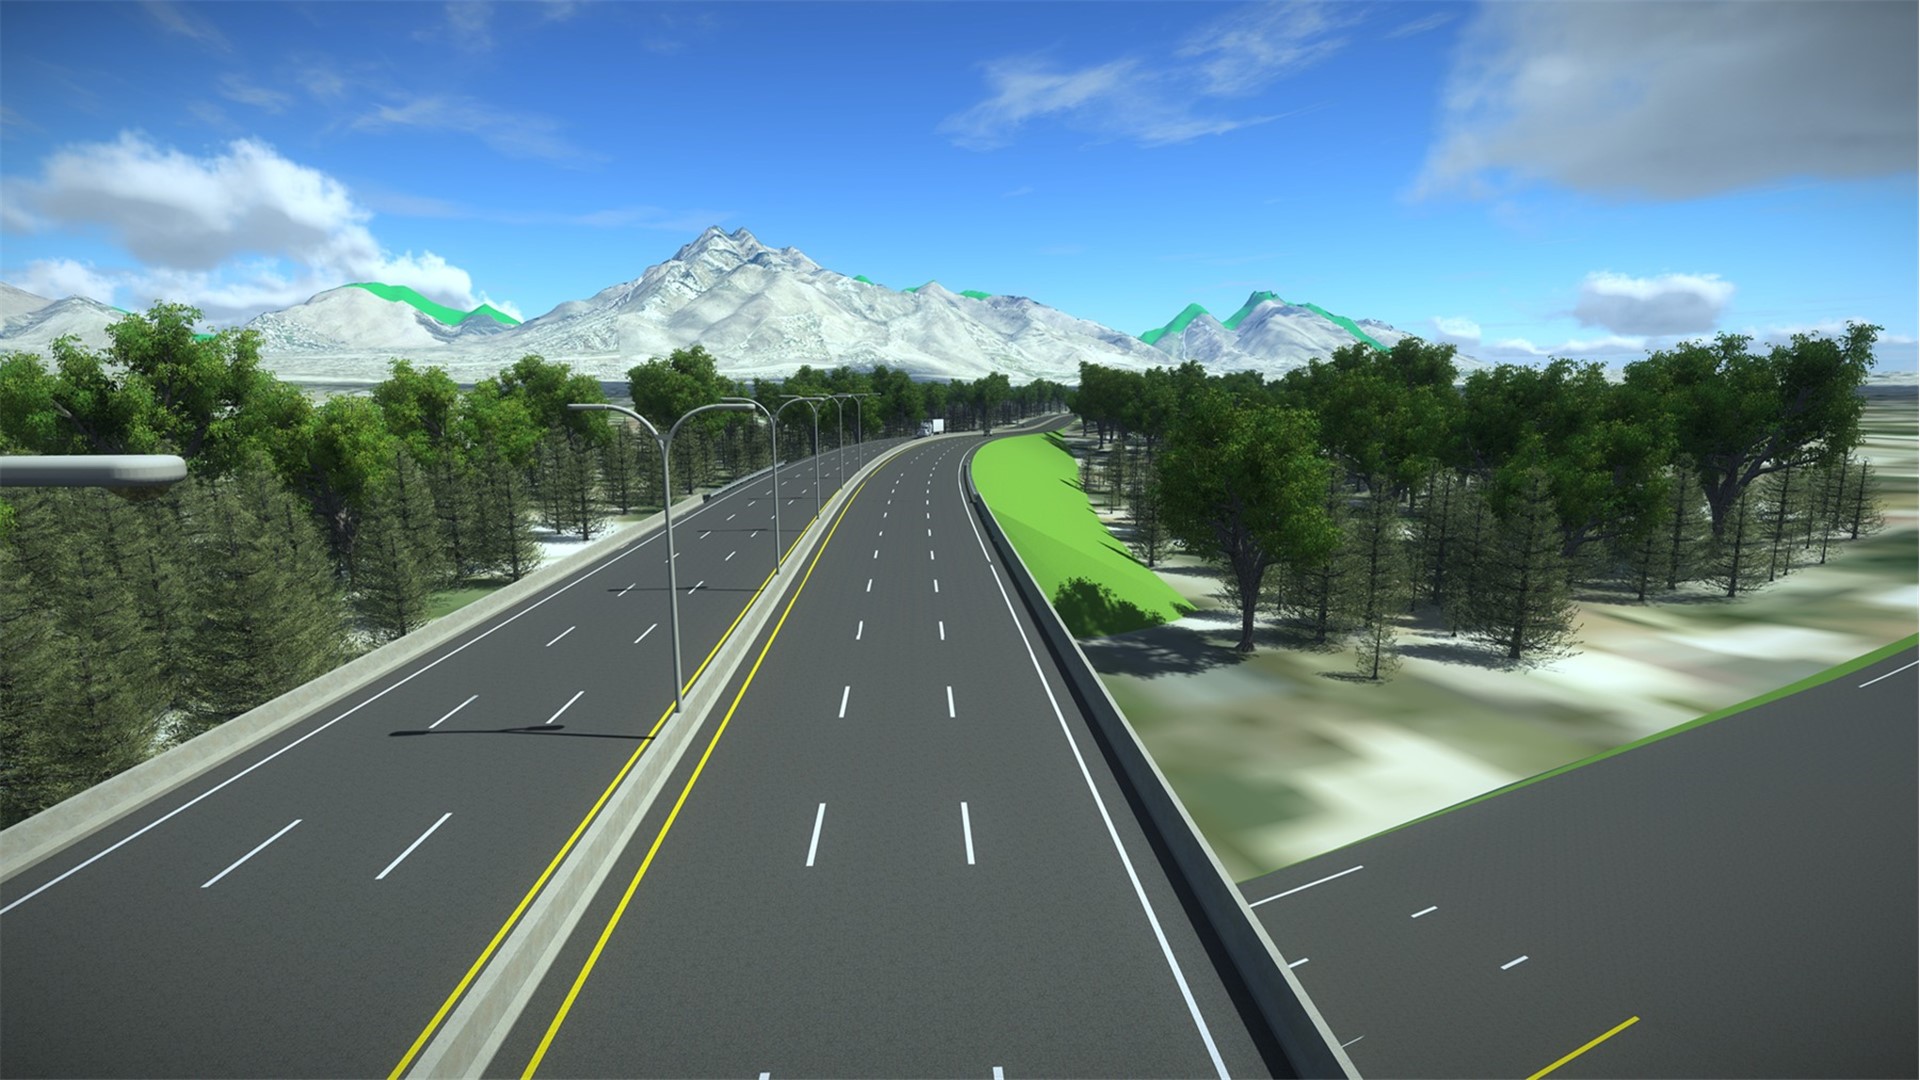 Включи дорога да. Проектирование автодорог. Проект автодороги. Проектирование автомобильной дороги. Ландшафтное проектирование автомобильных дорог.